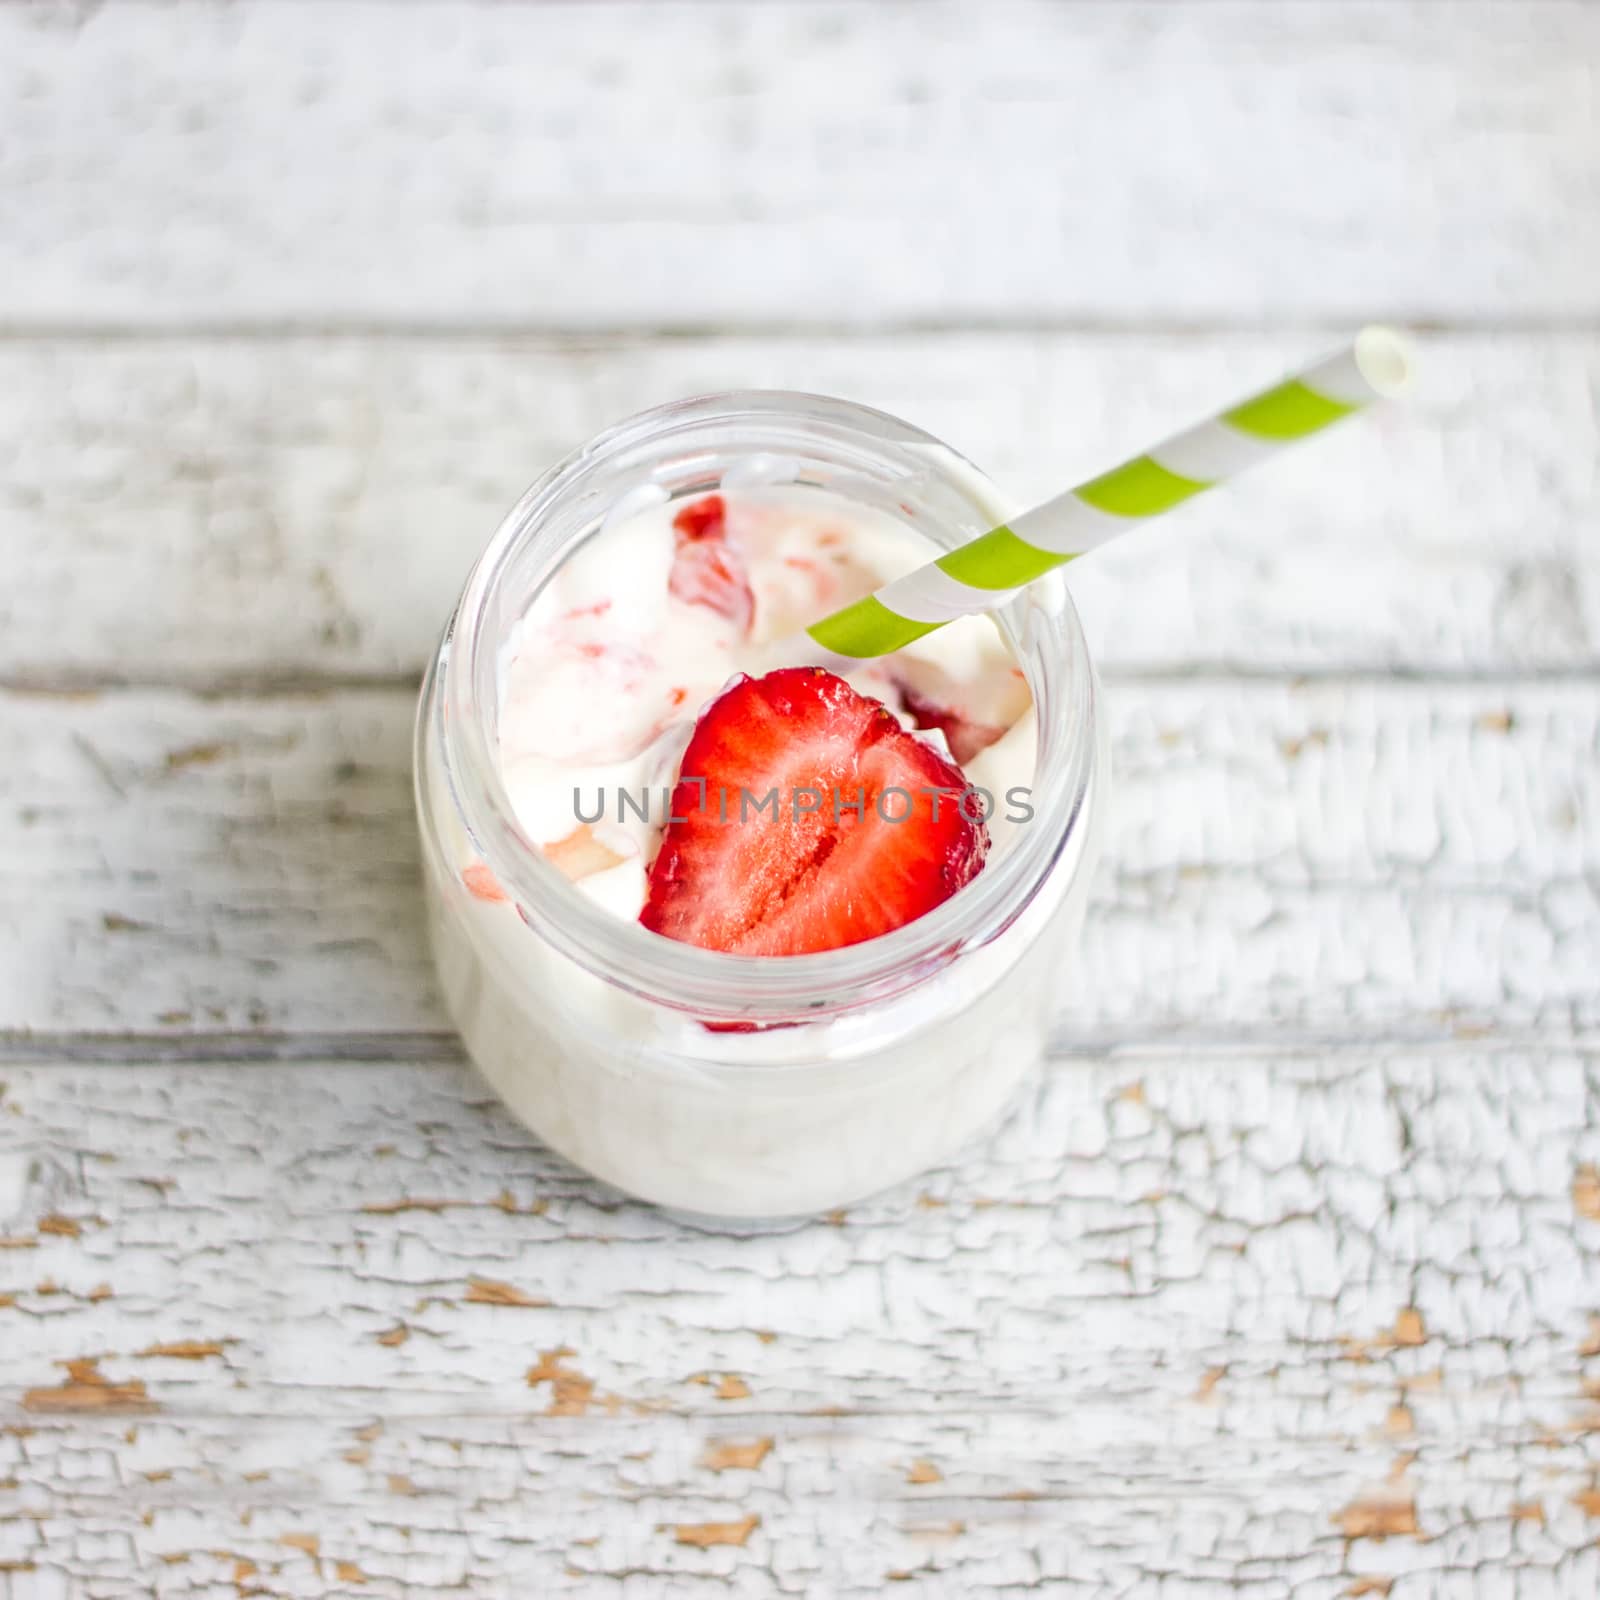 Smoothie yogurt, strawberries in glass jar on wooden by victosha